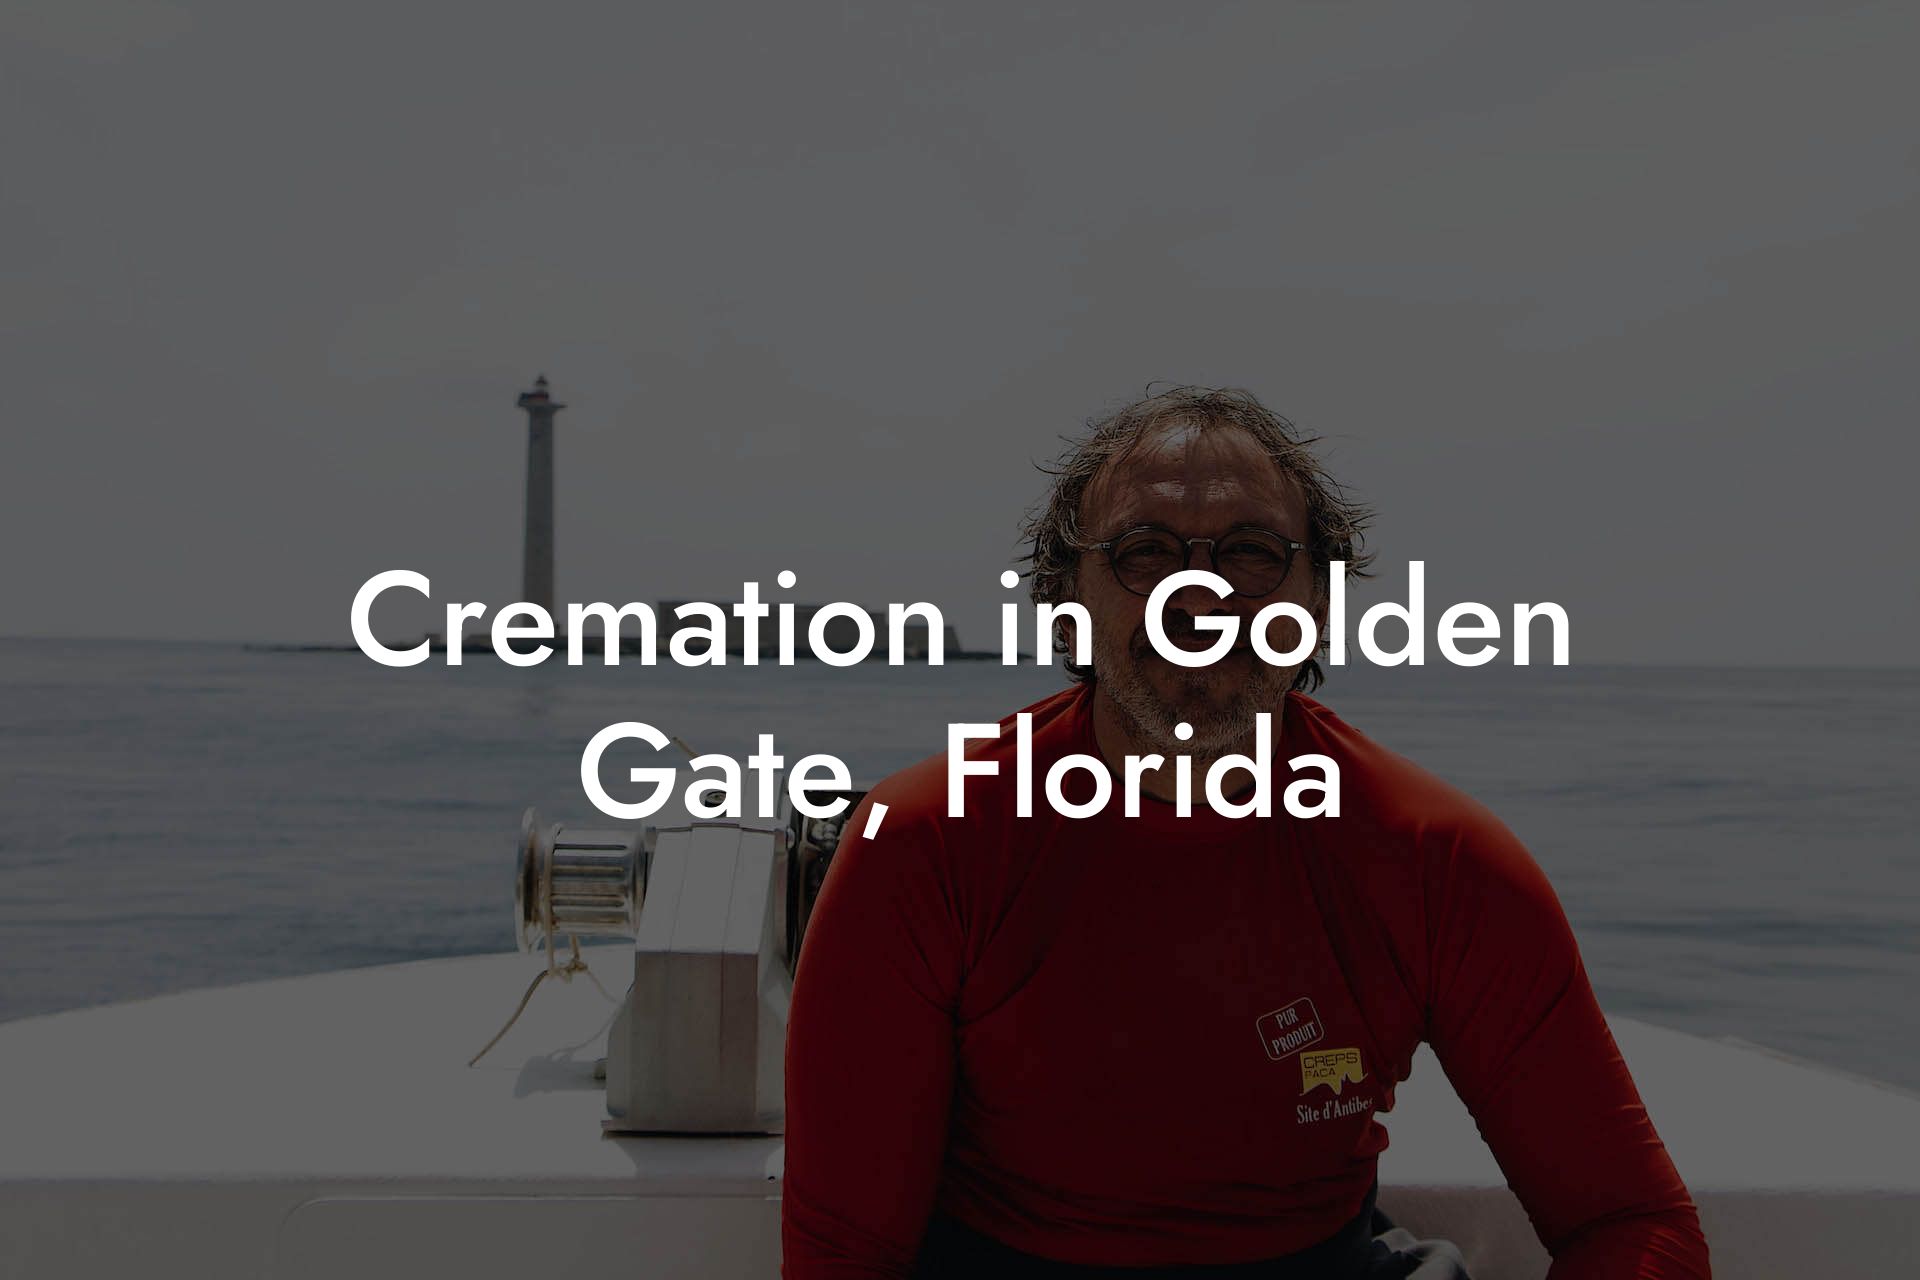 Cremation in Golden Gate, Florida